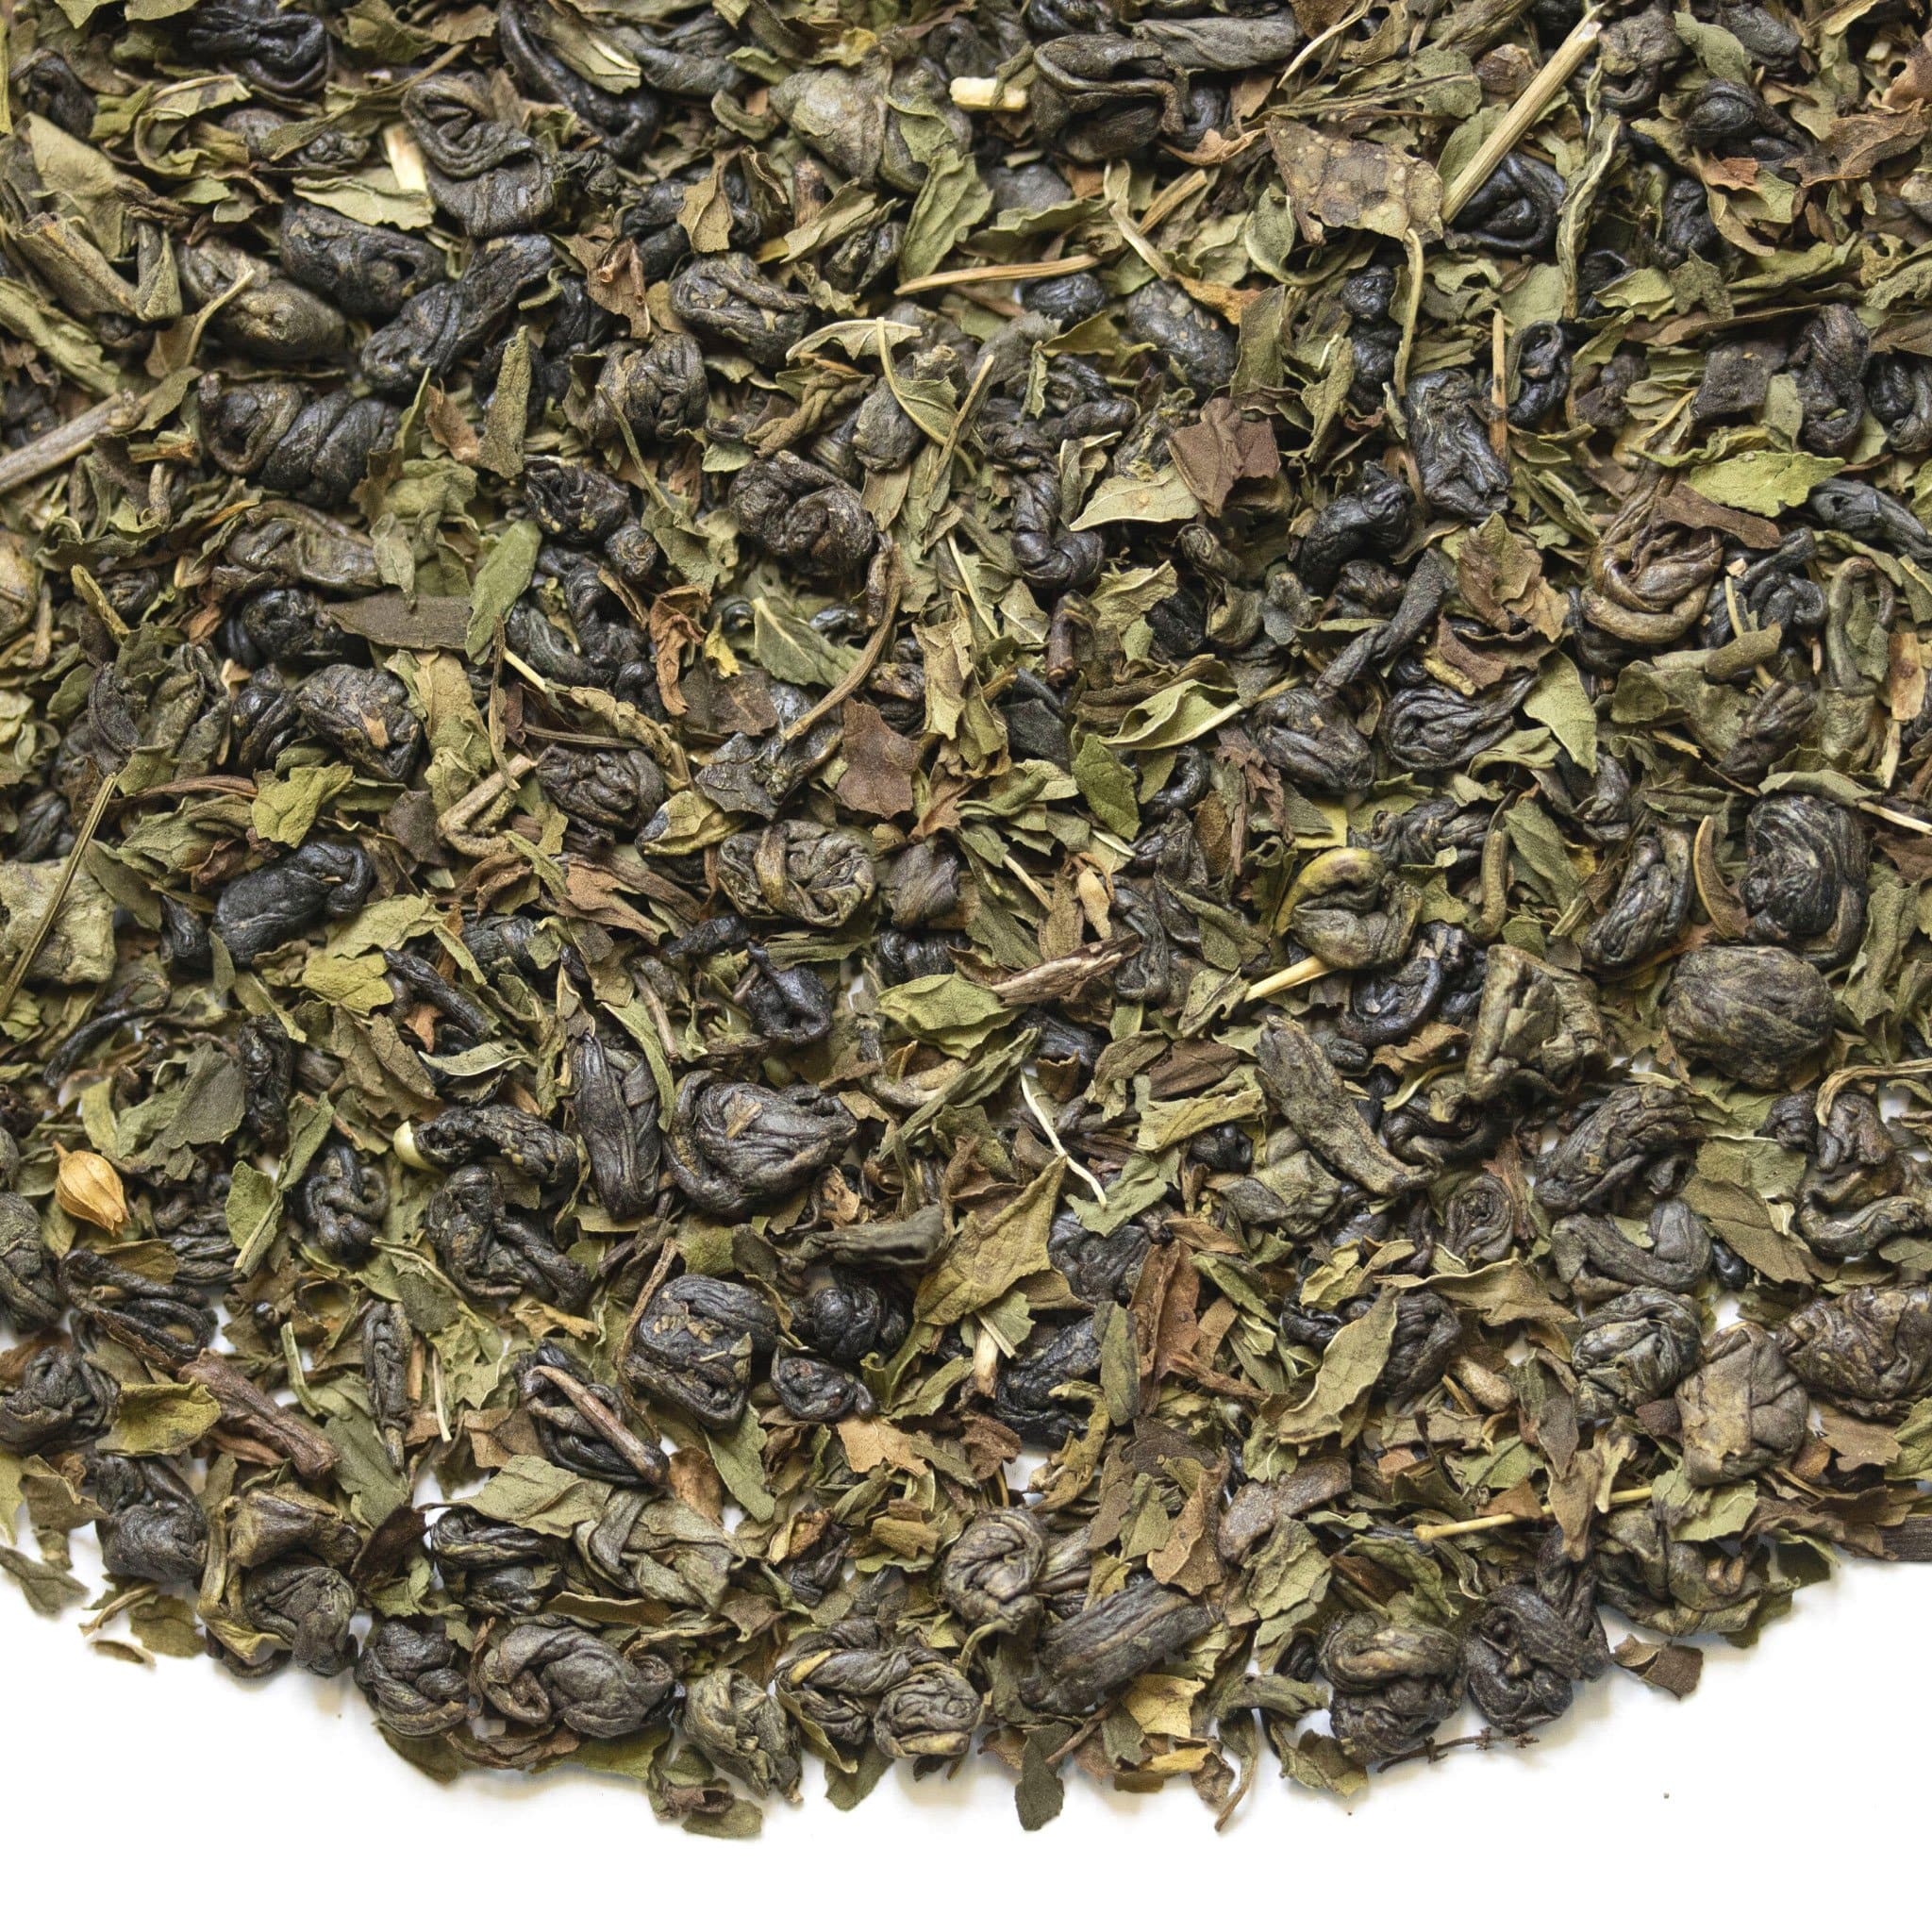 Loose leaf Moroccan Mint green tea